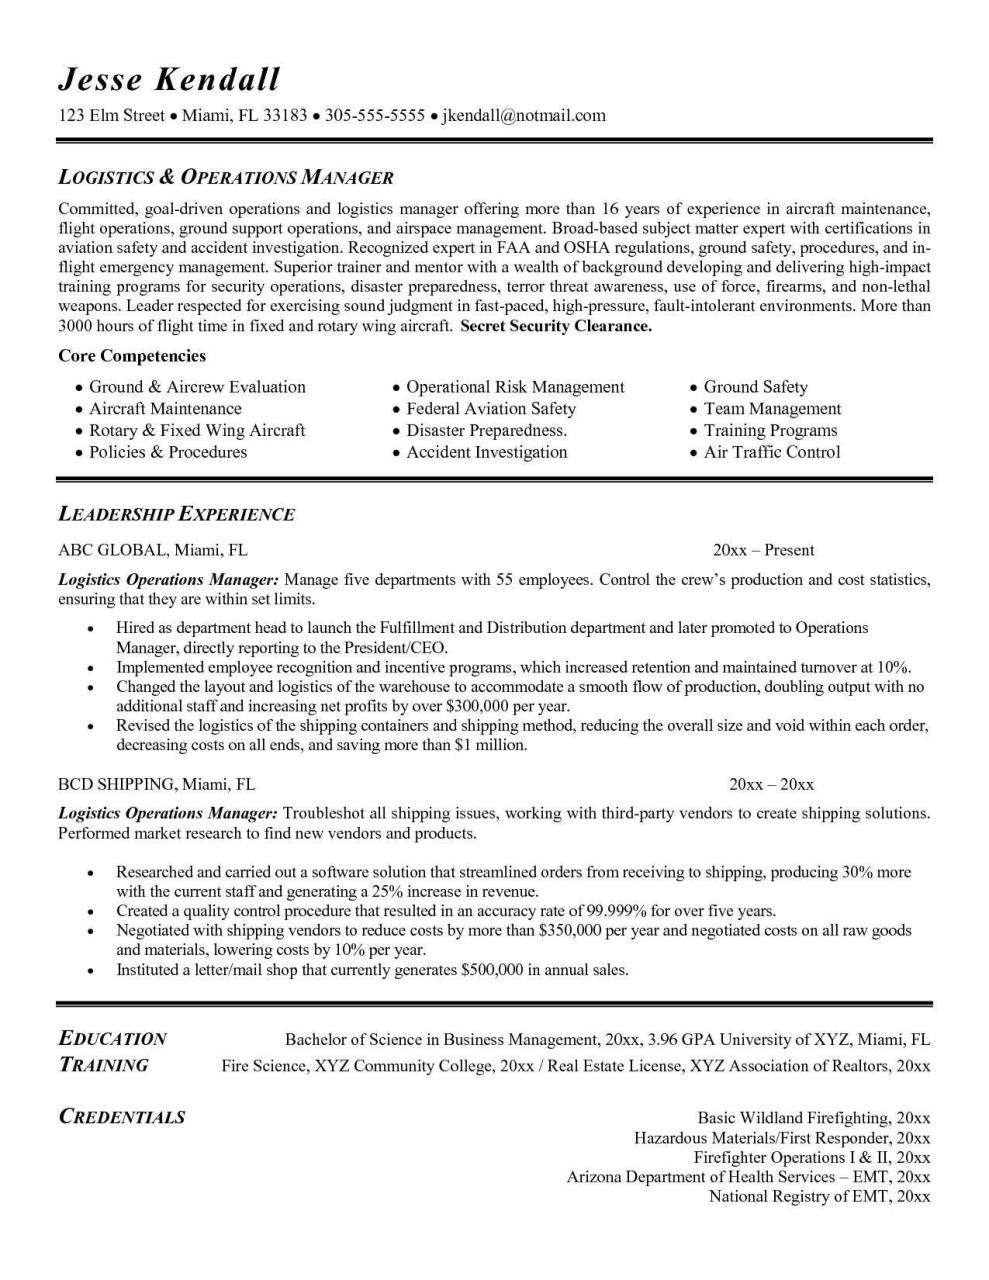 Sample Resume For Logistics Coordinator